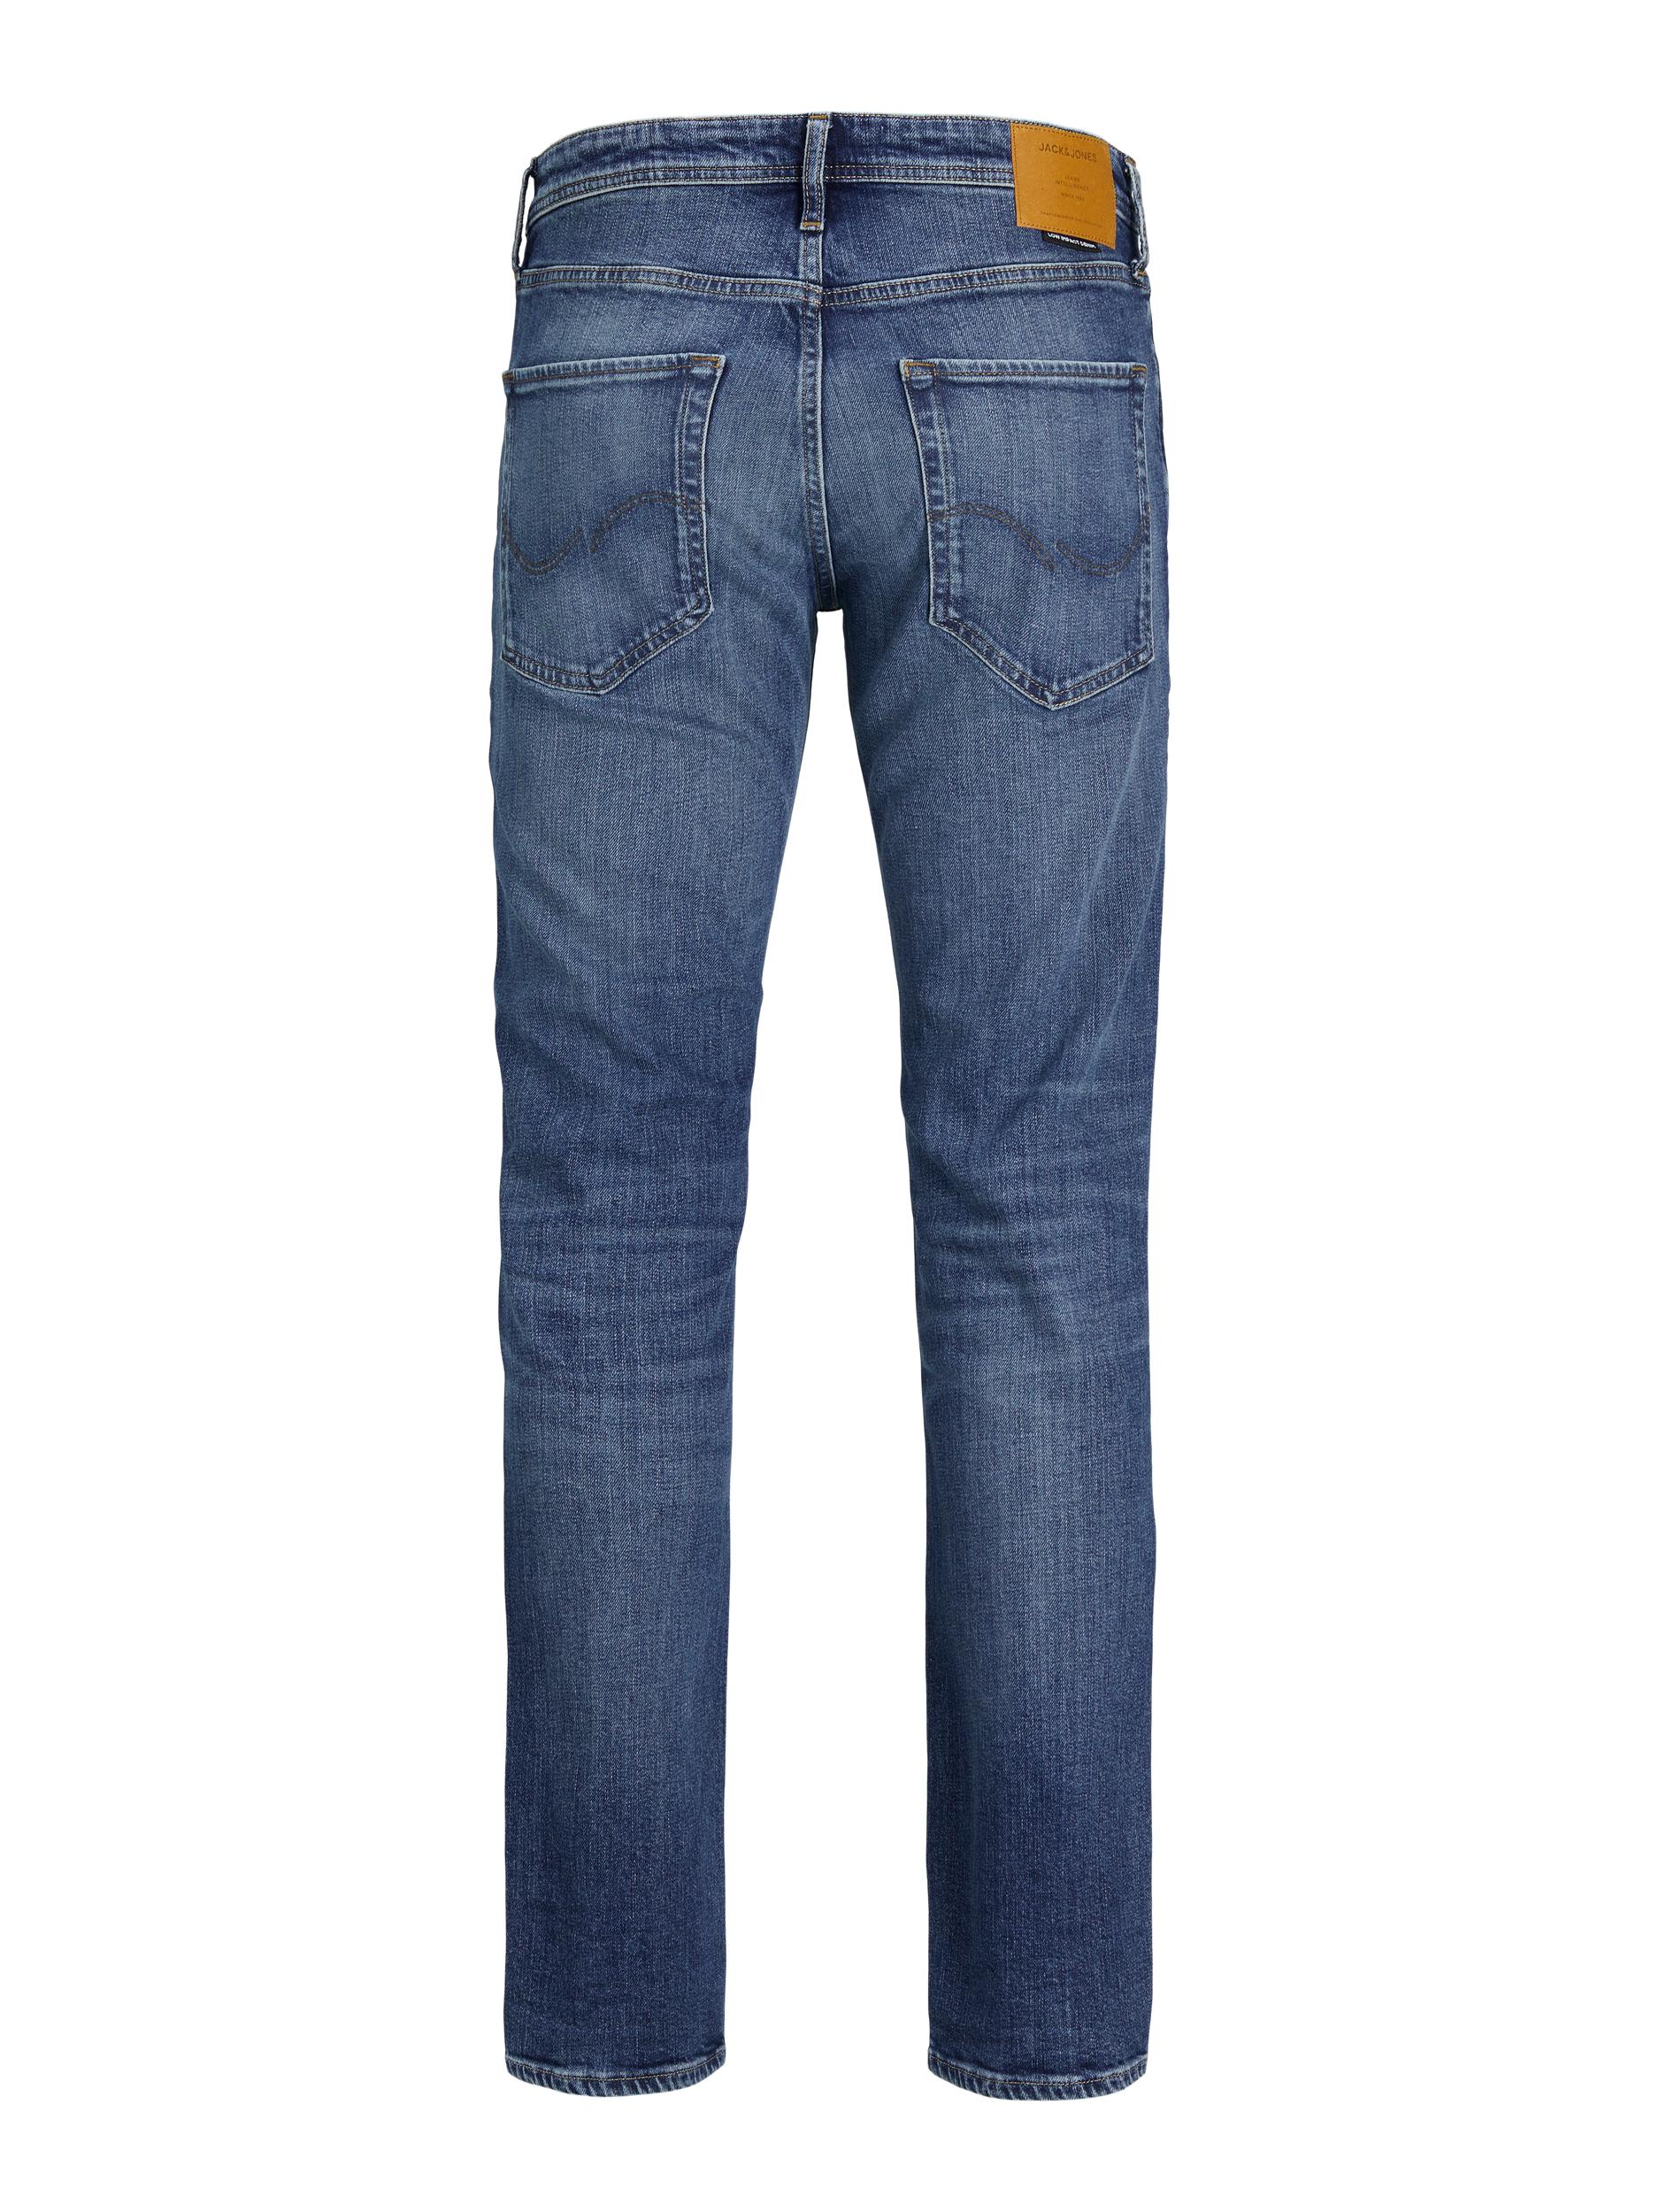 Jack & Jones Clark jeans, blue denim, 31/34